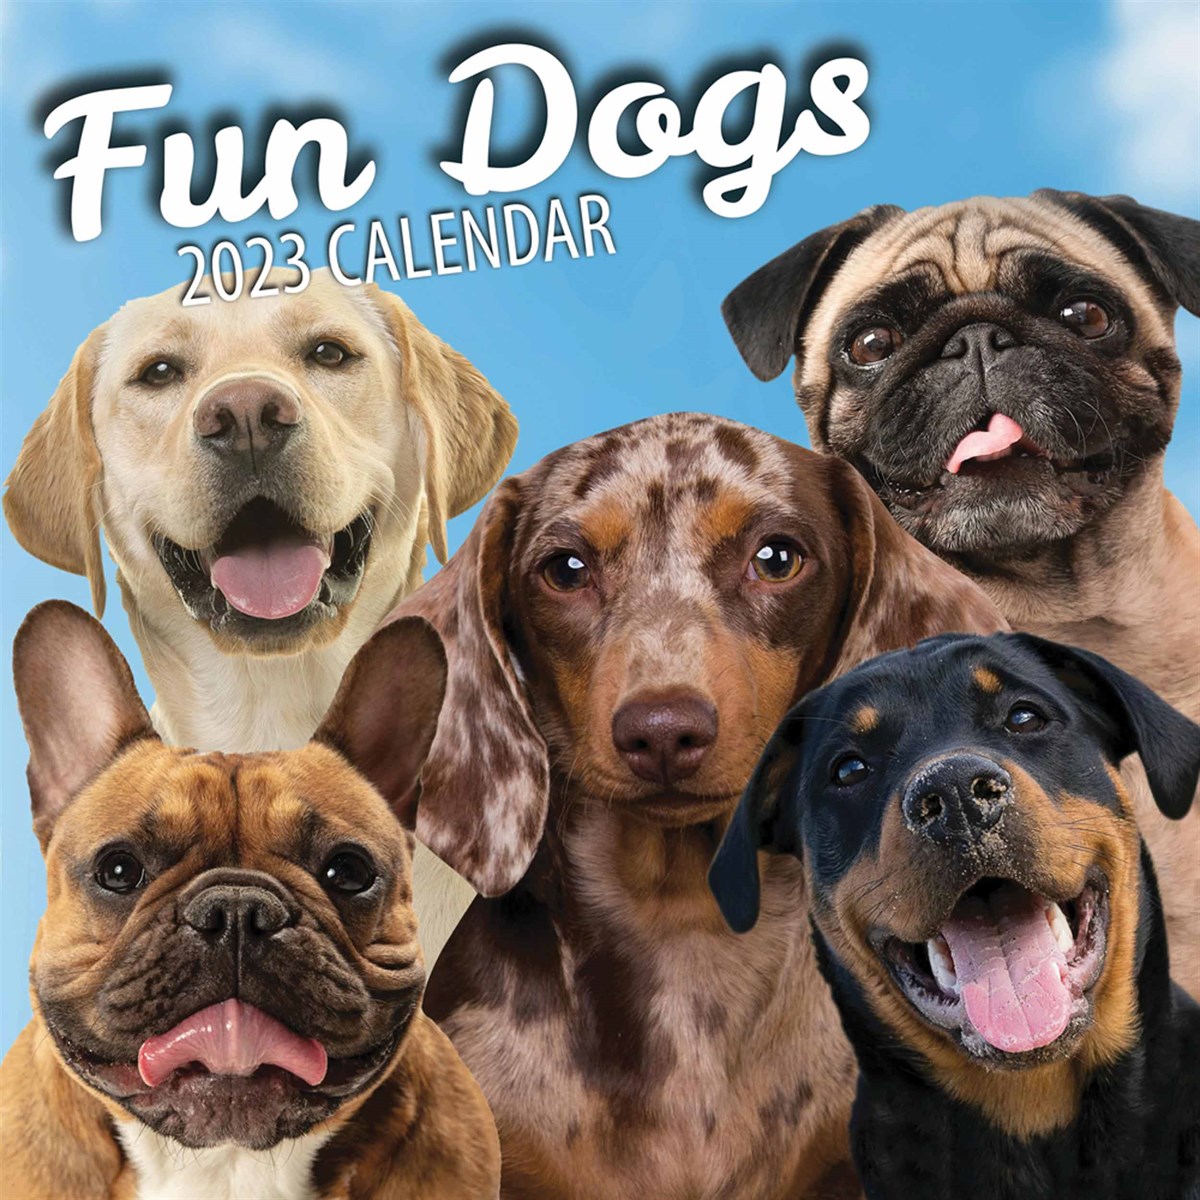 Fun Dogs 2023 Calendars